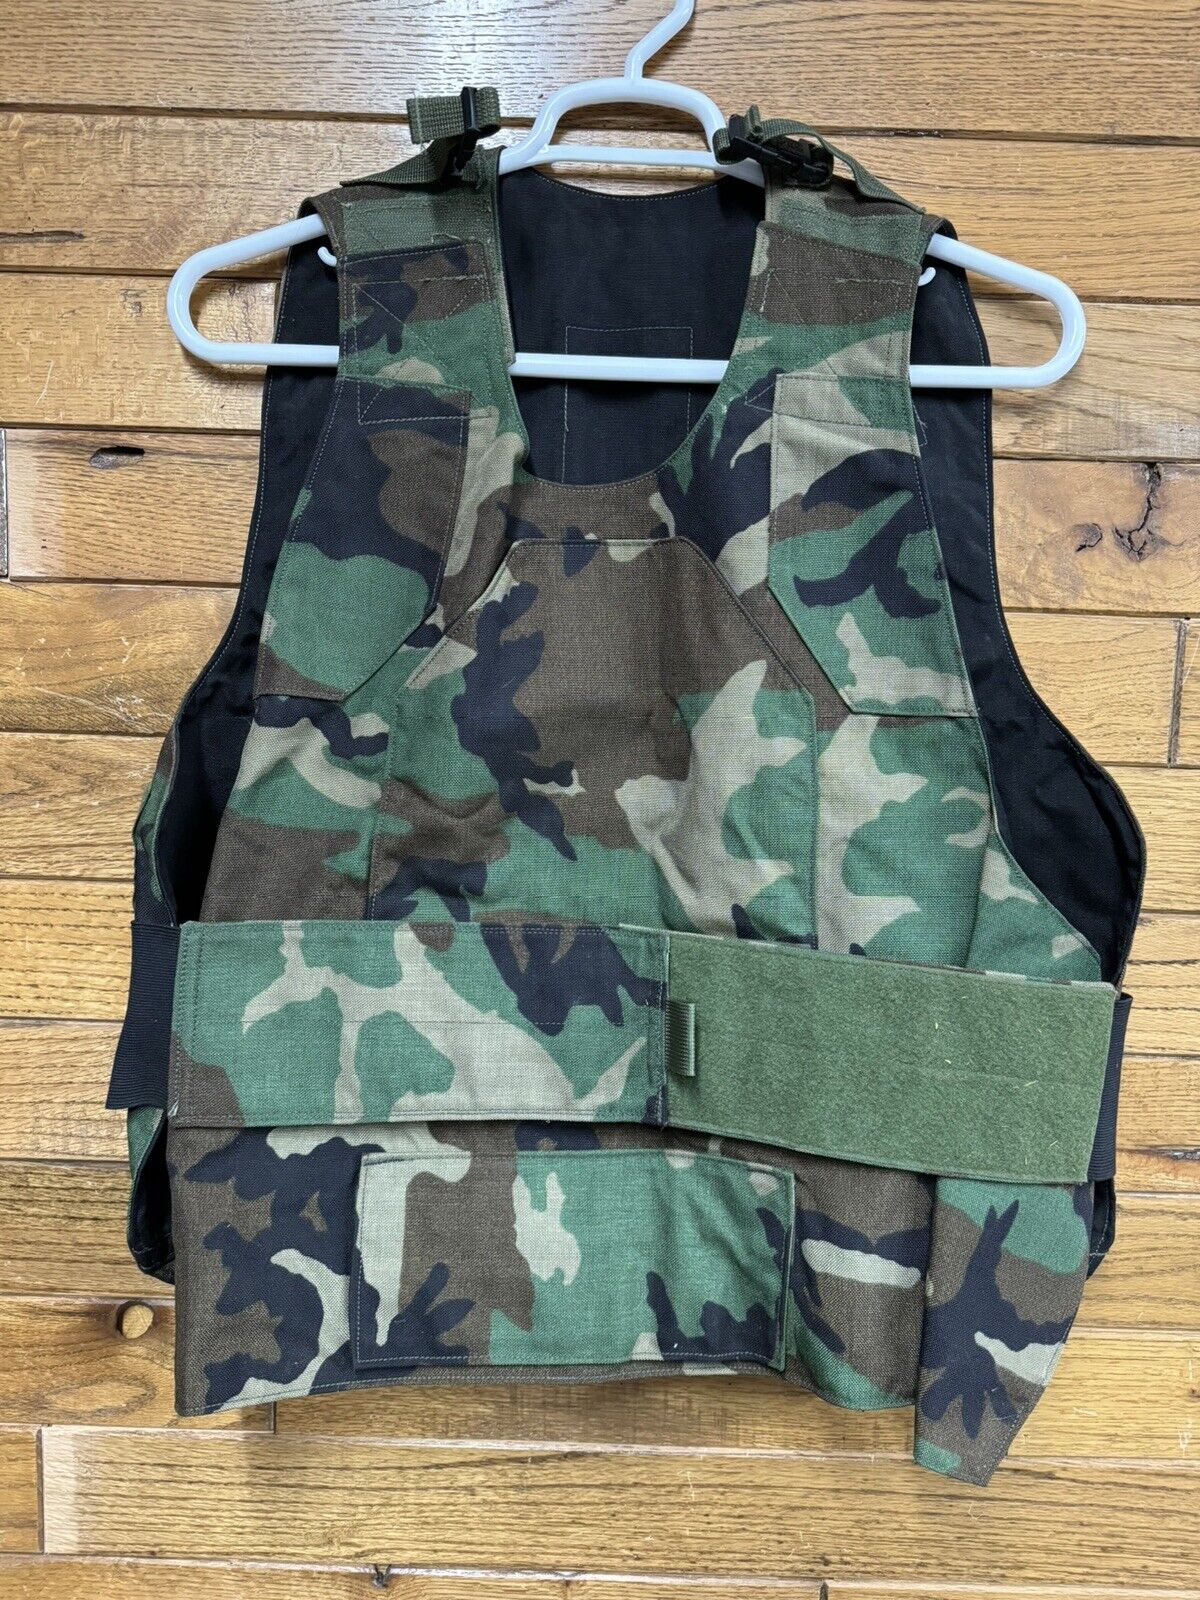 Body Armour Cover Flak Jacket Vest  Military Woodland Camouflage  Medium